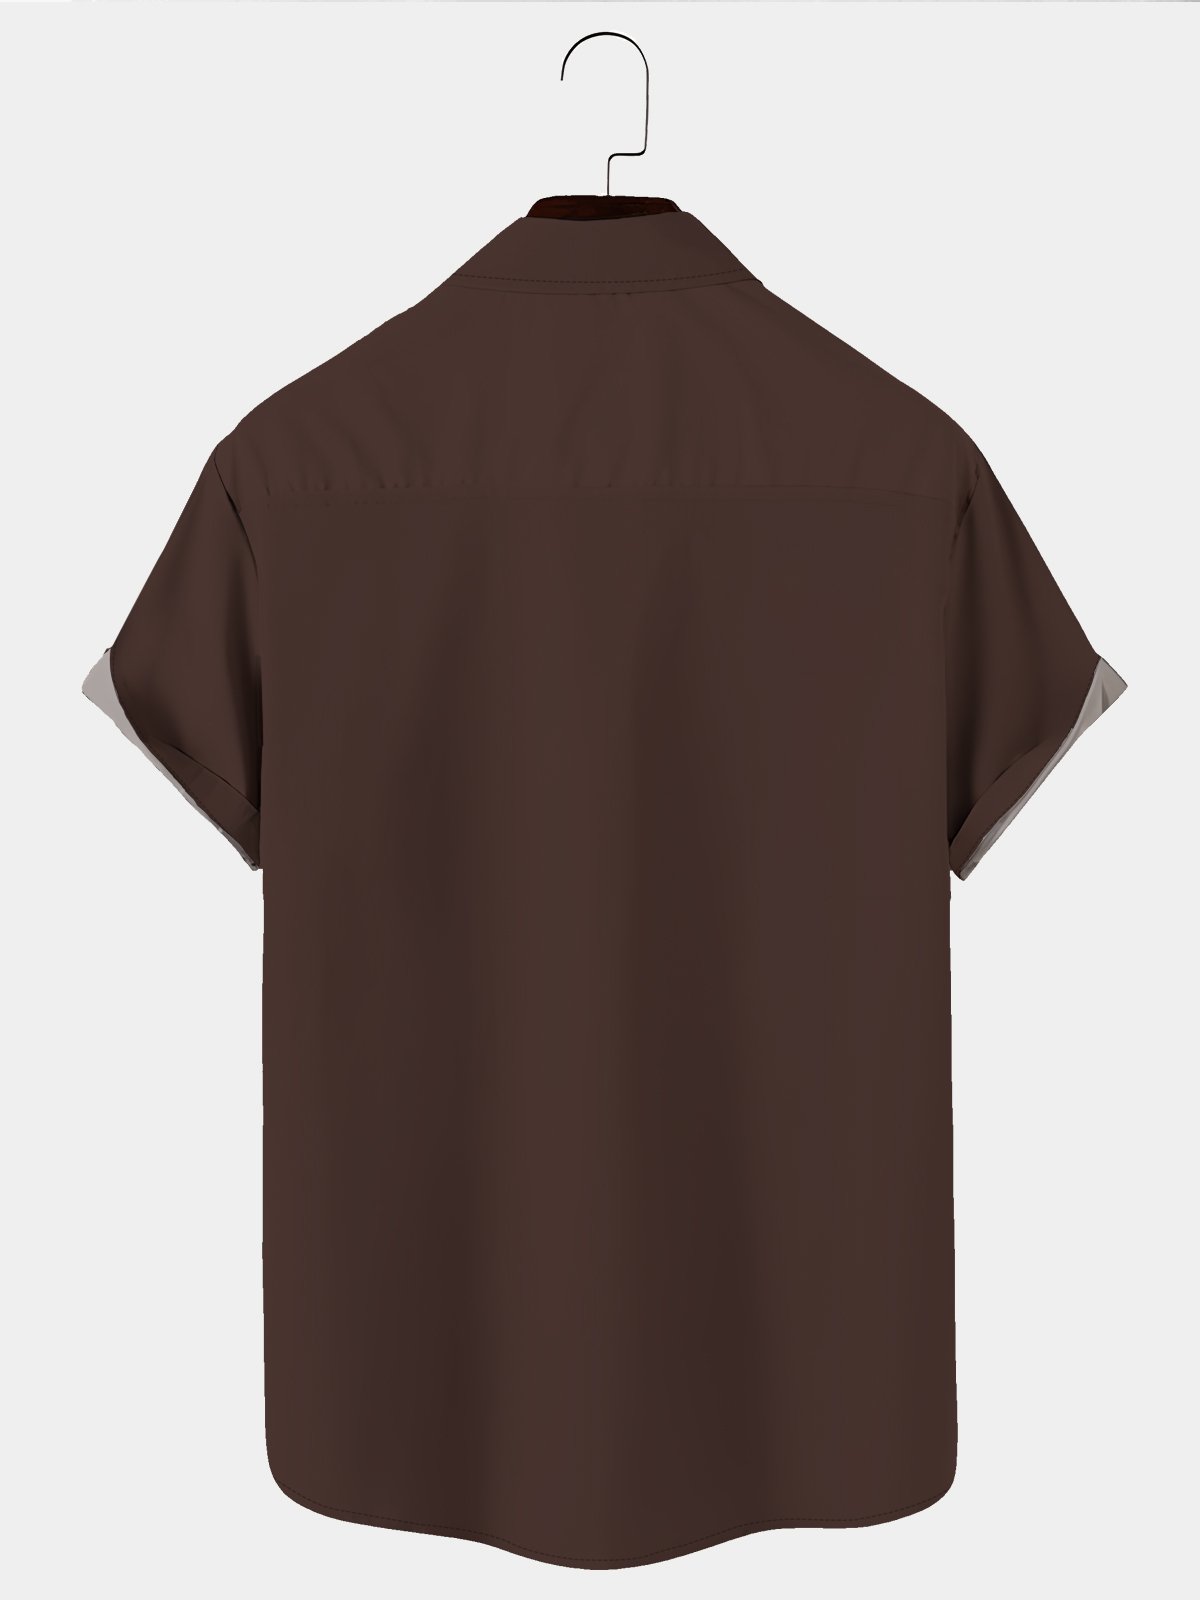 Royaura Vintage Hawaiian Coconut Tree Print Men's Black Chest Bag Shirt Plus Size Shirt